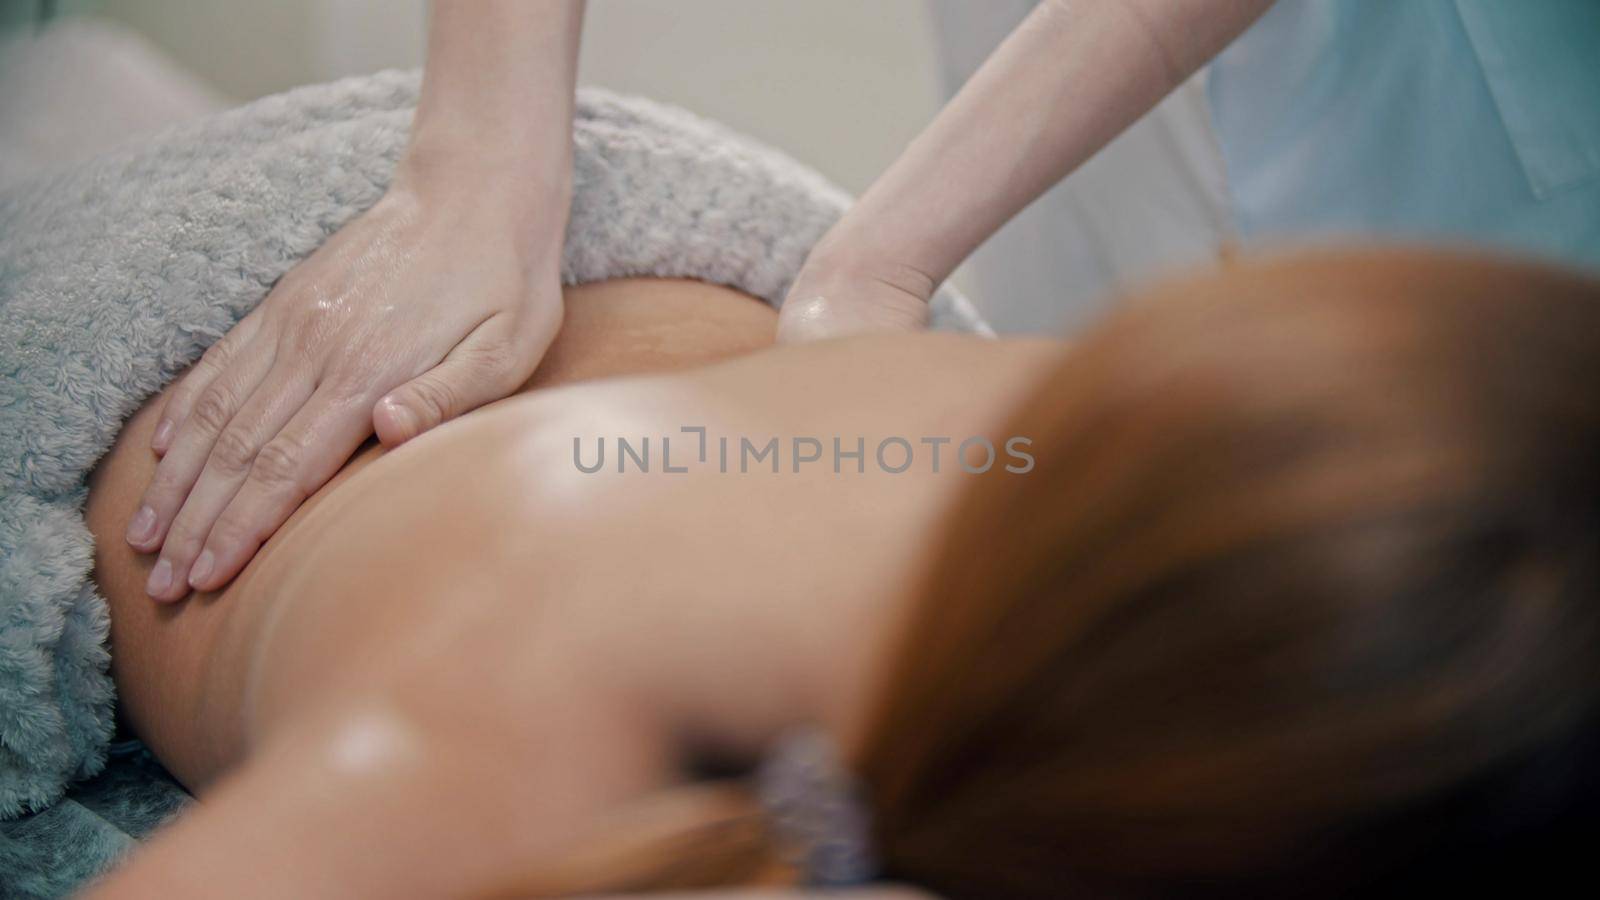 Massage treatment - massage master massaging womans back using oil - indoor